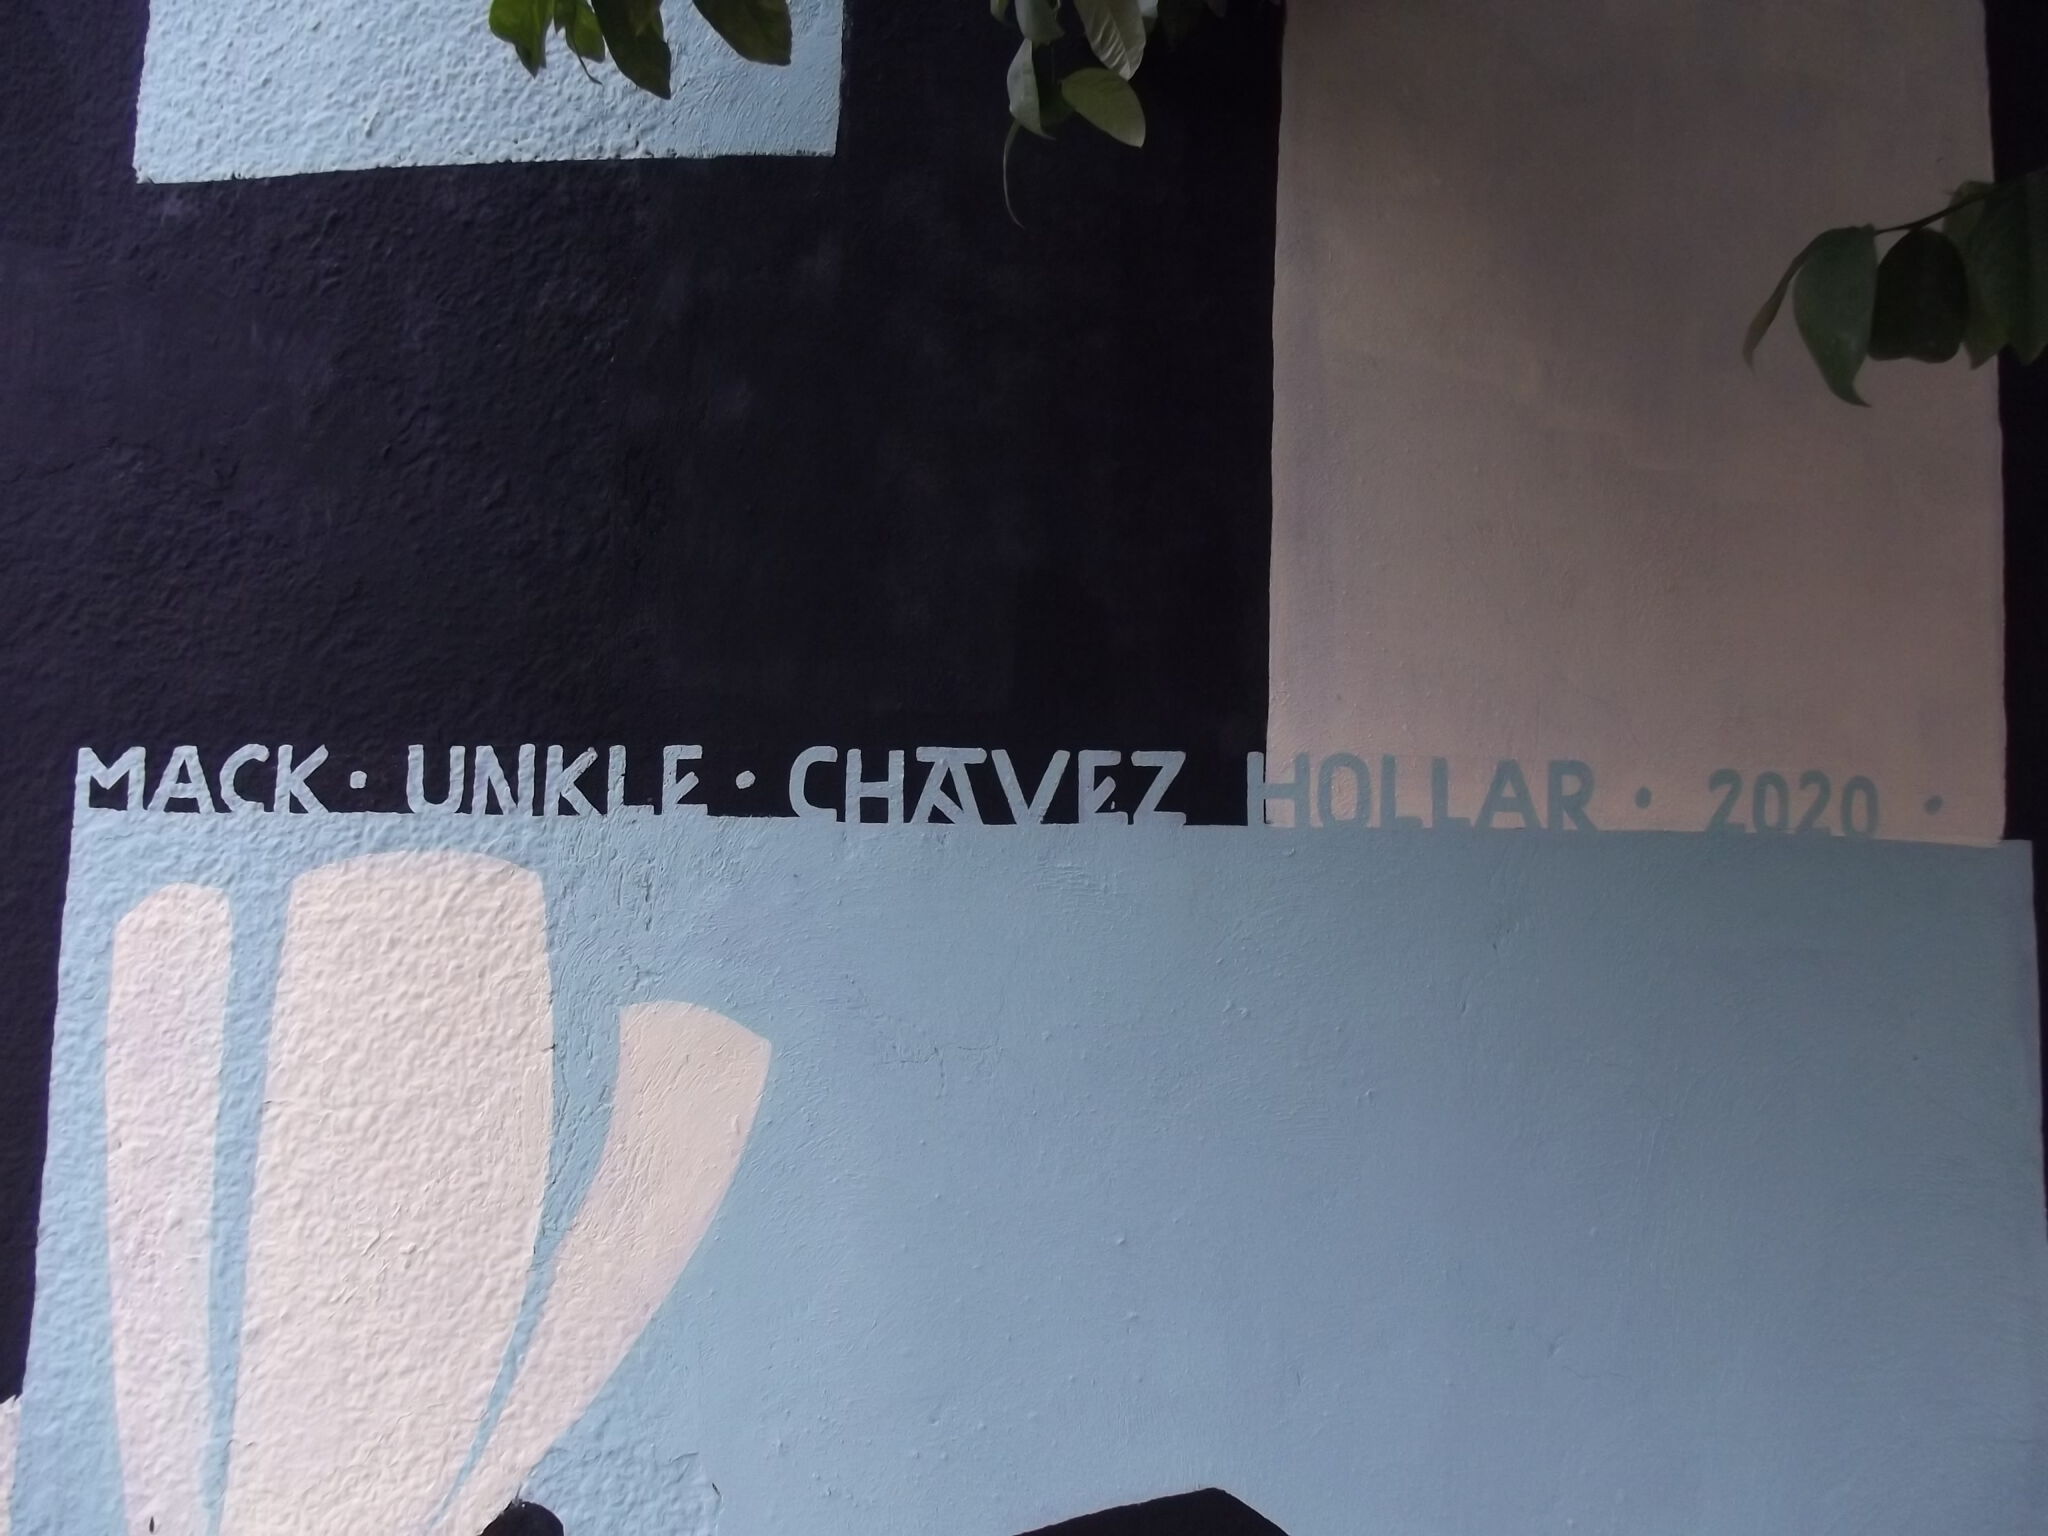 unkleevolve, maack194, Chavez Hollar&mdash;Tu Nombre